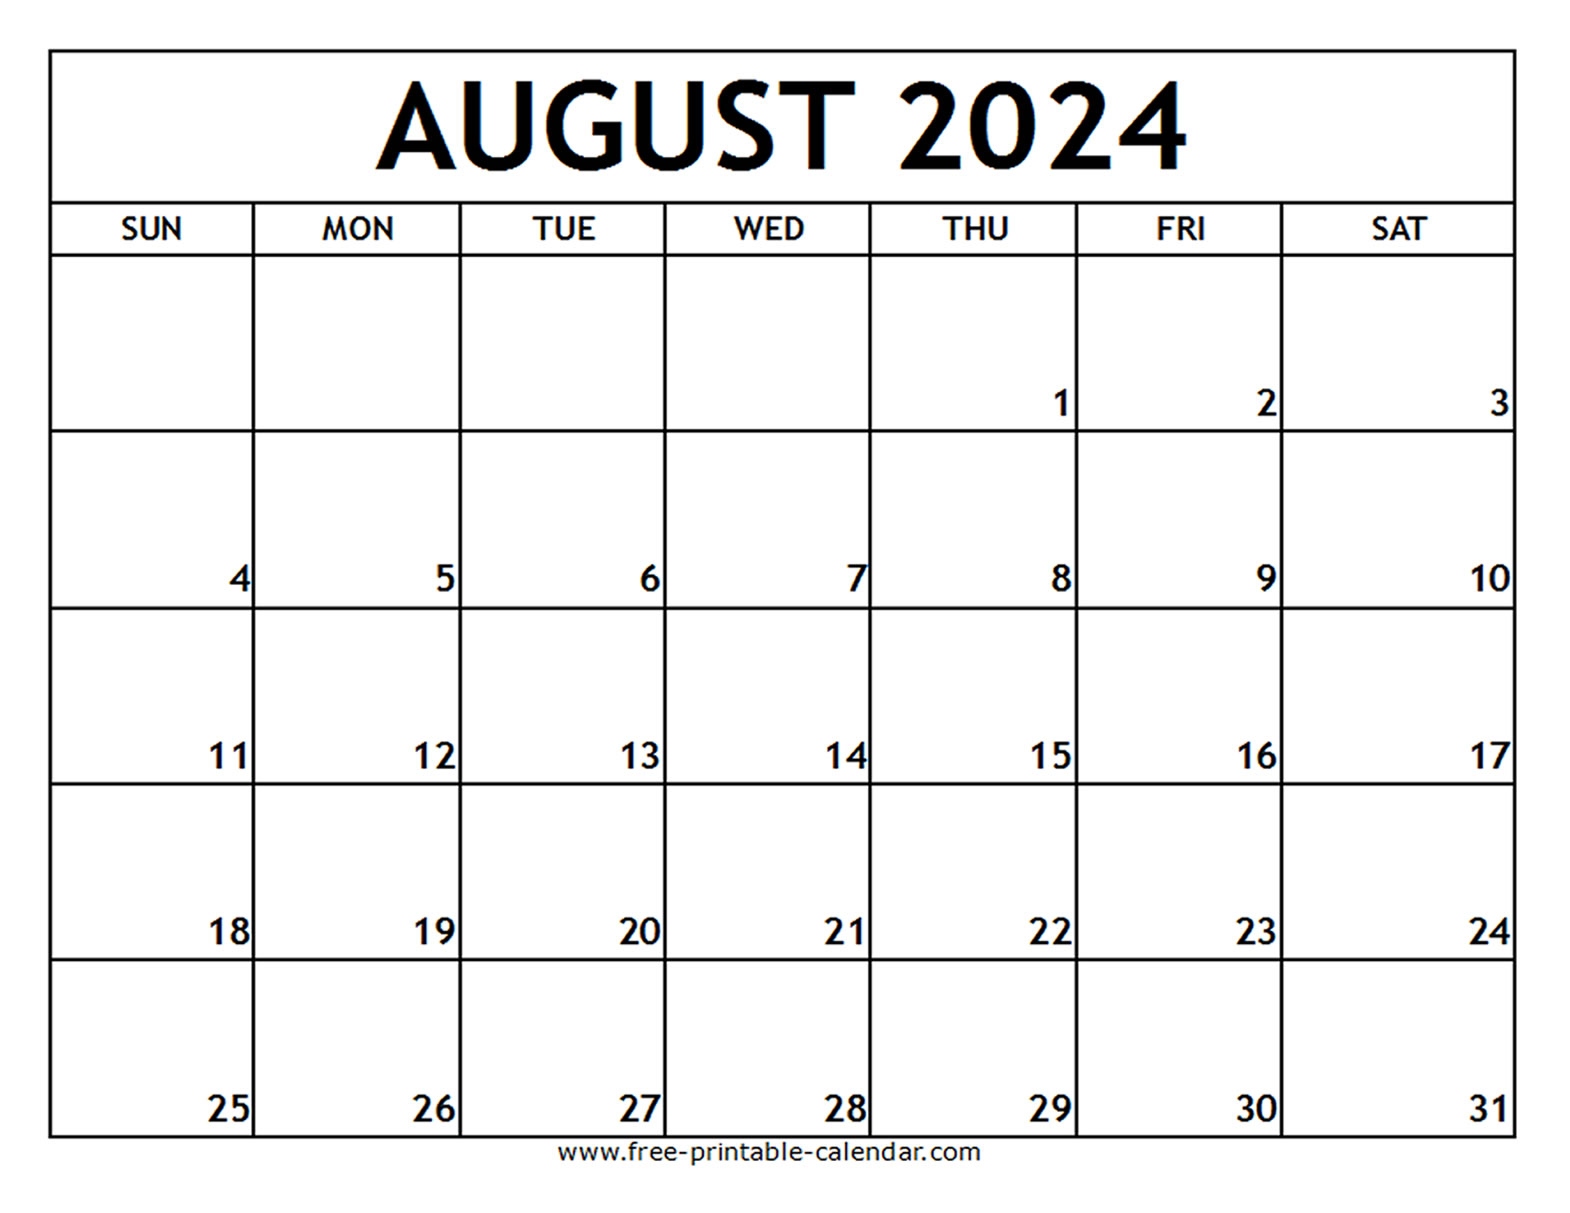 August 2024 Printable Calendar - Free-Printable-Calendar intended for Free Printable Calendar 2024 August